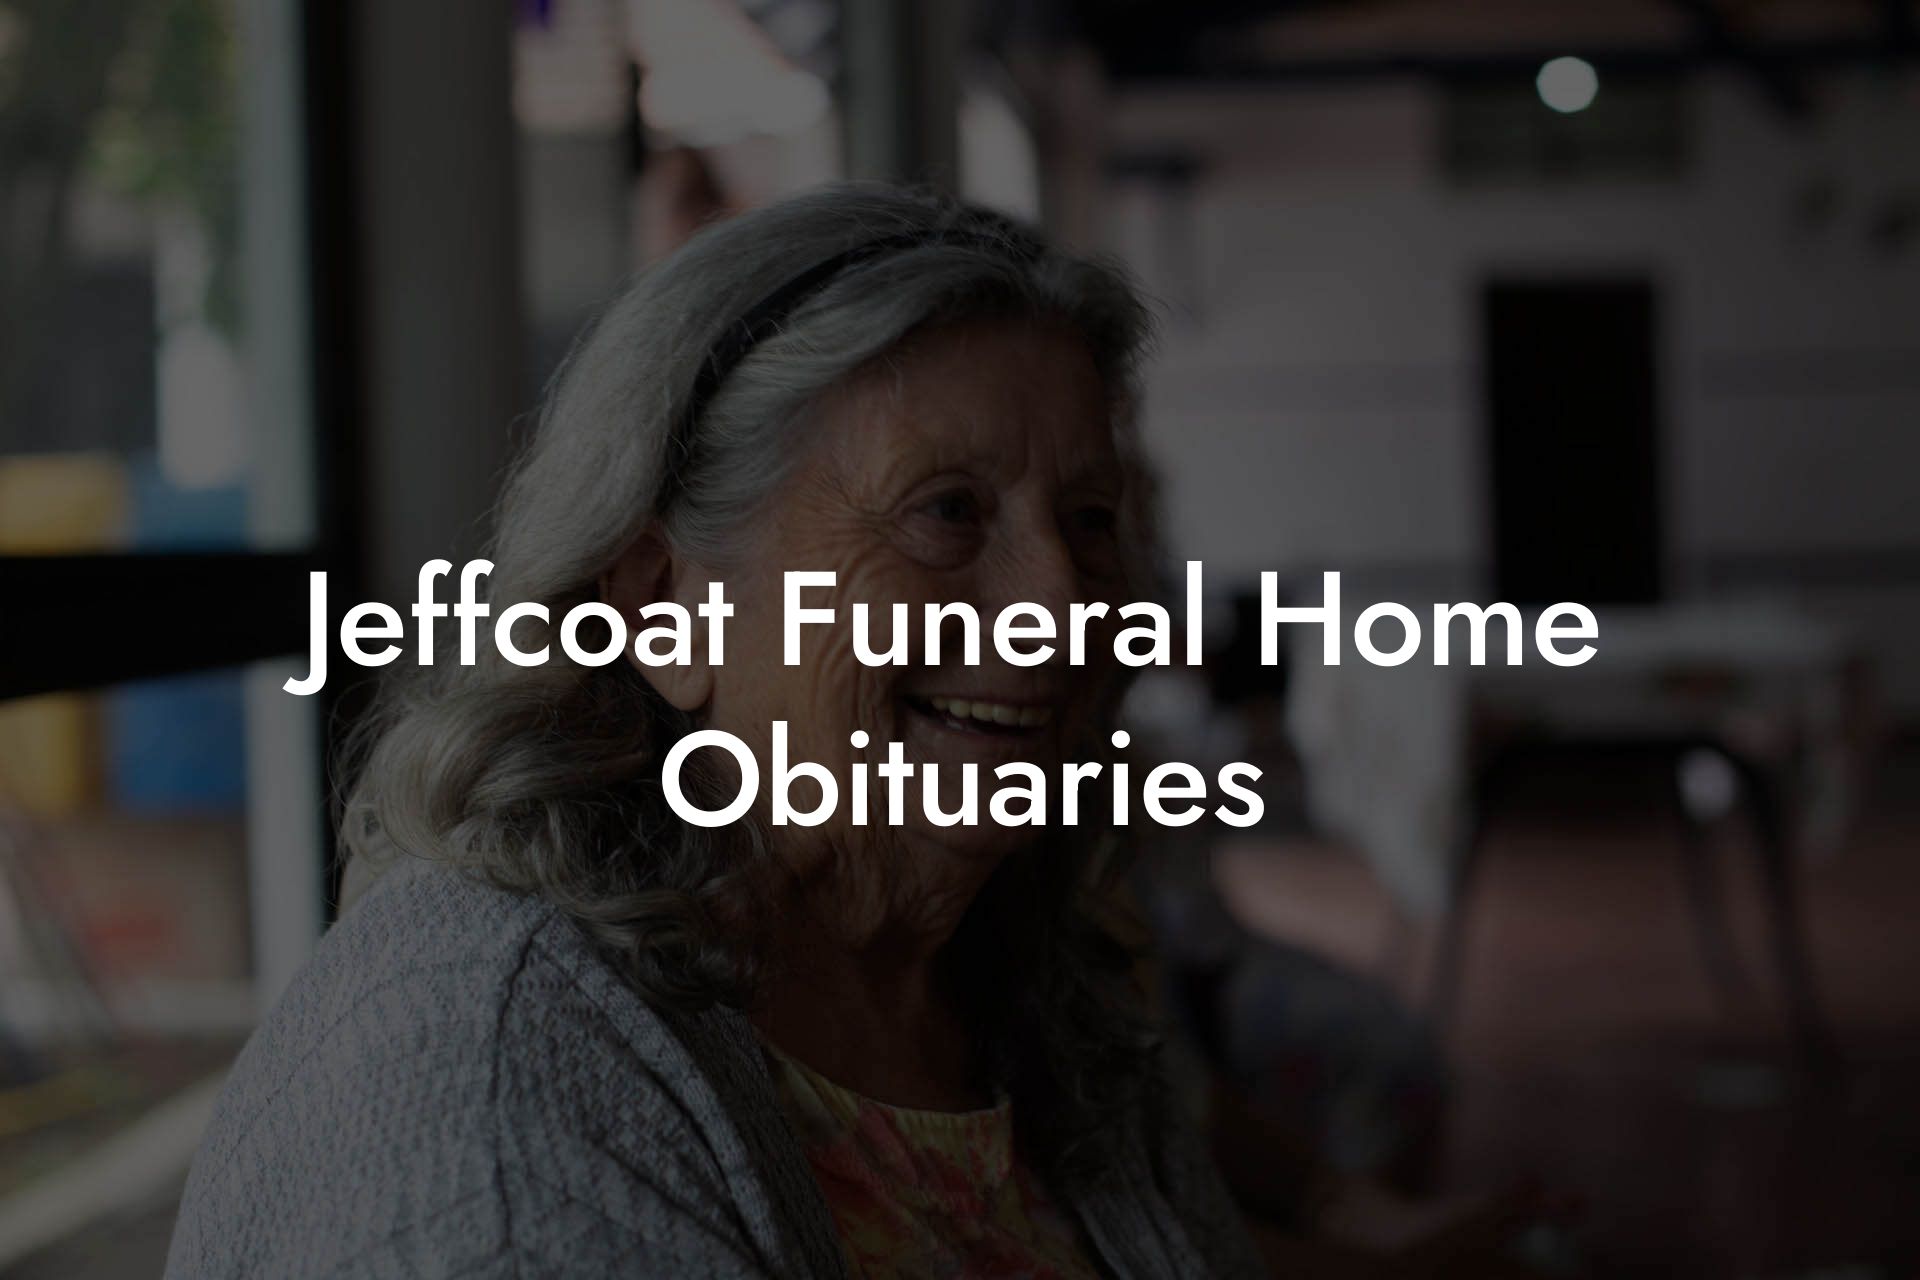 Jeffcoat Funeral Home Obituaries